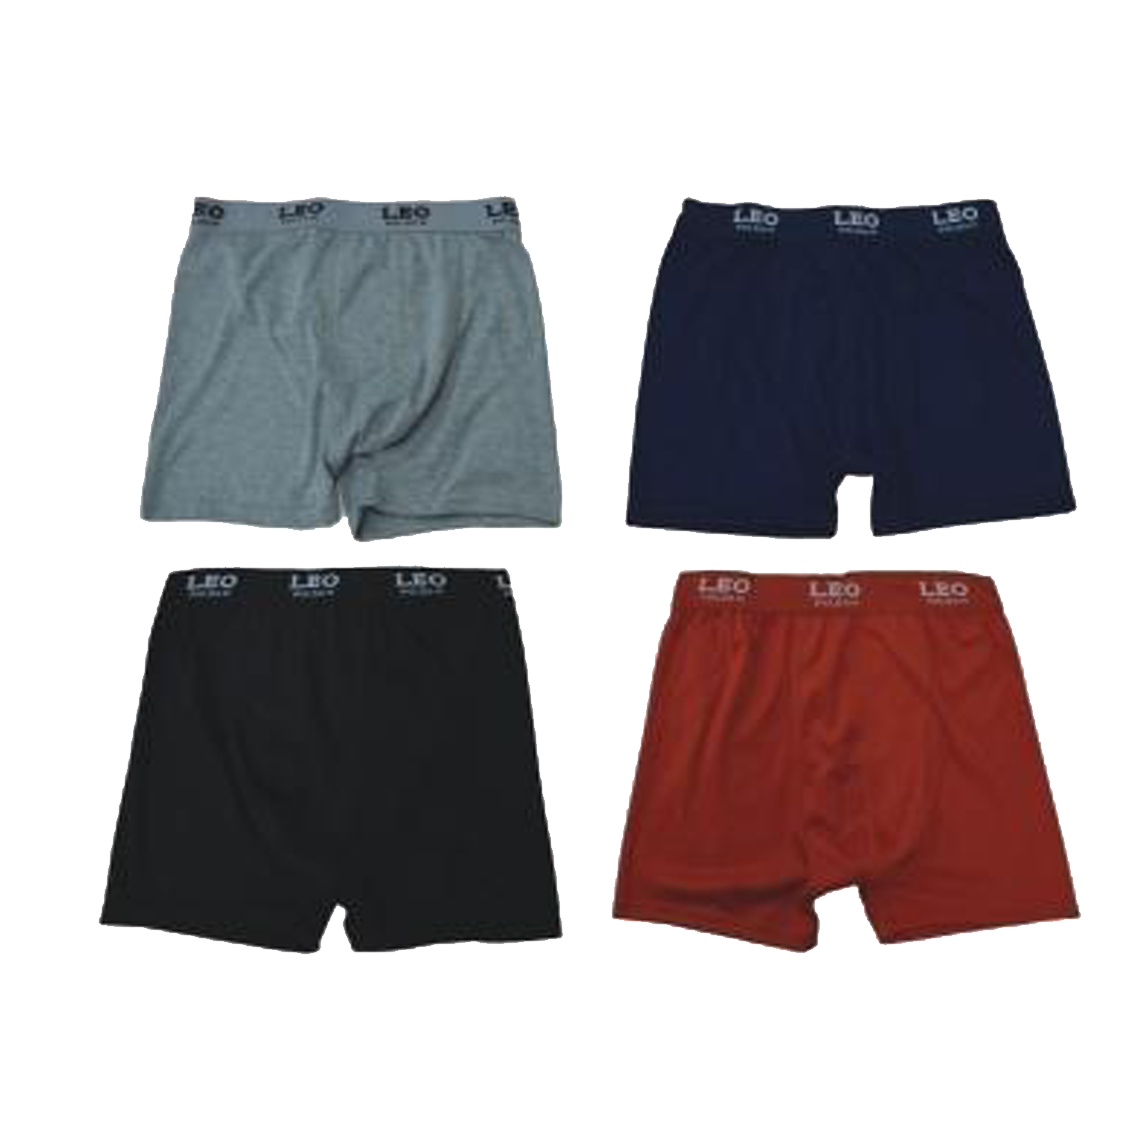 Wholesale Men's Clothing Apparel Assorted Underwear M/L,XL/XXL Tony NQK3